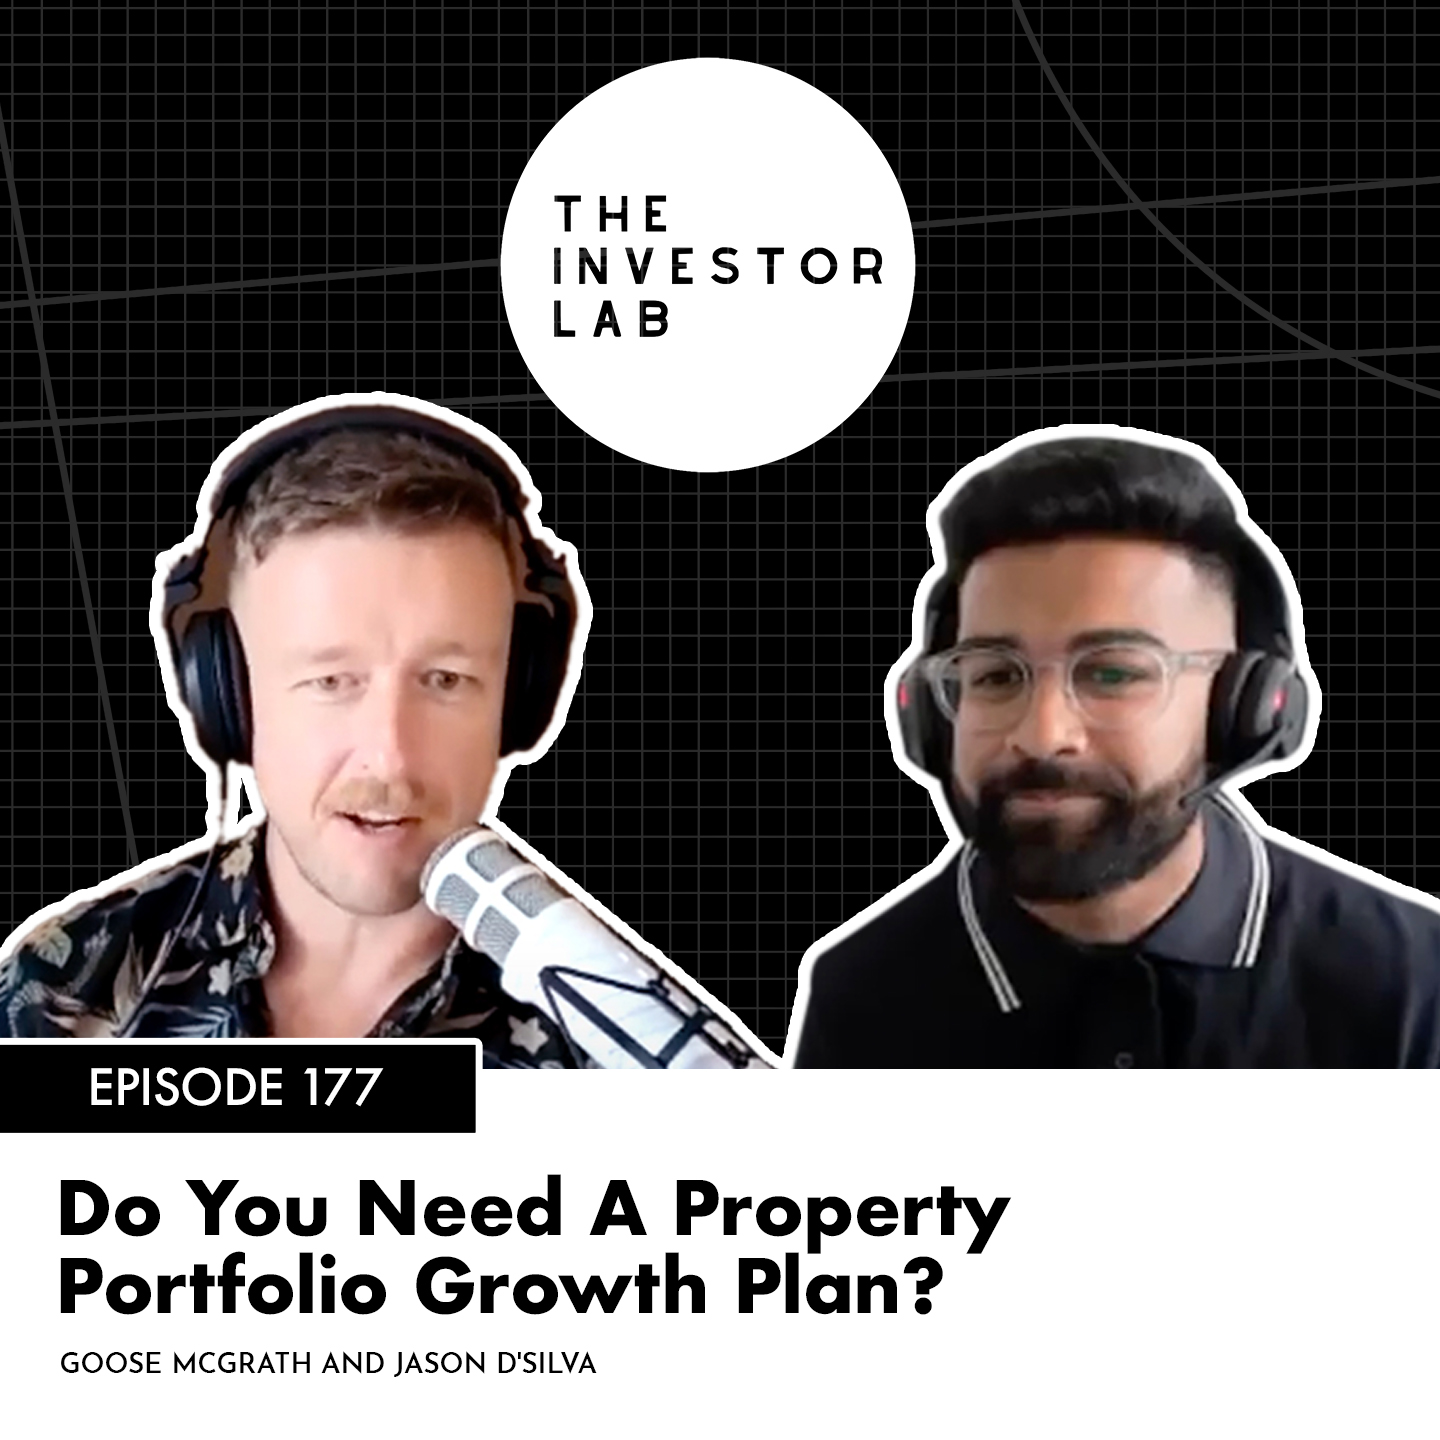 Do You Need A Property Portfolio Growth Plan?